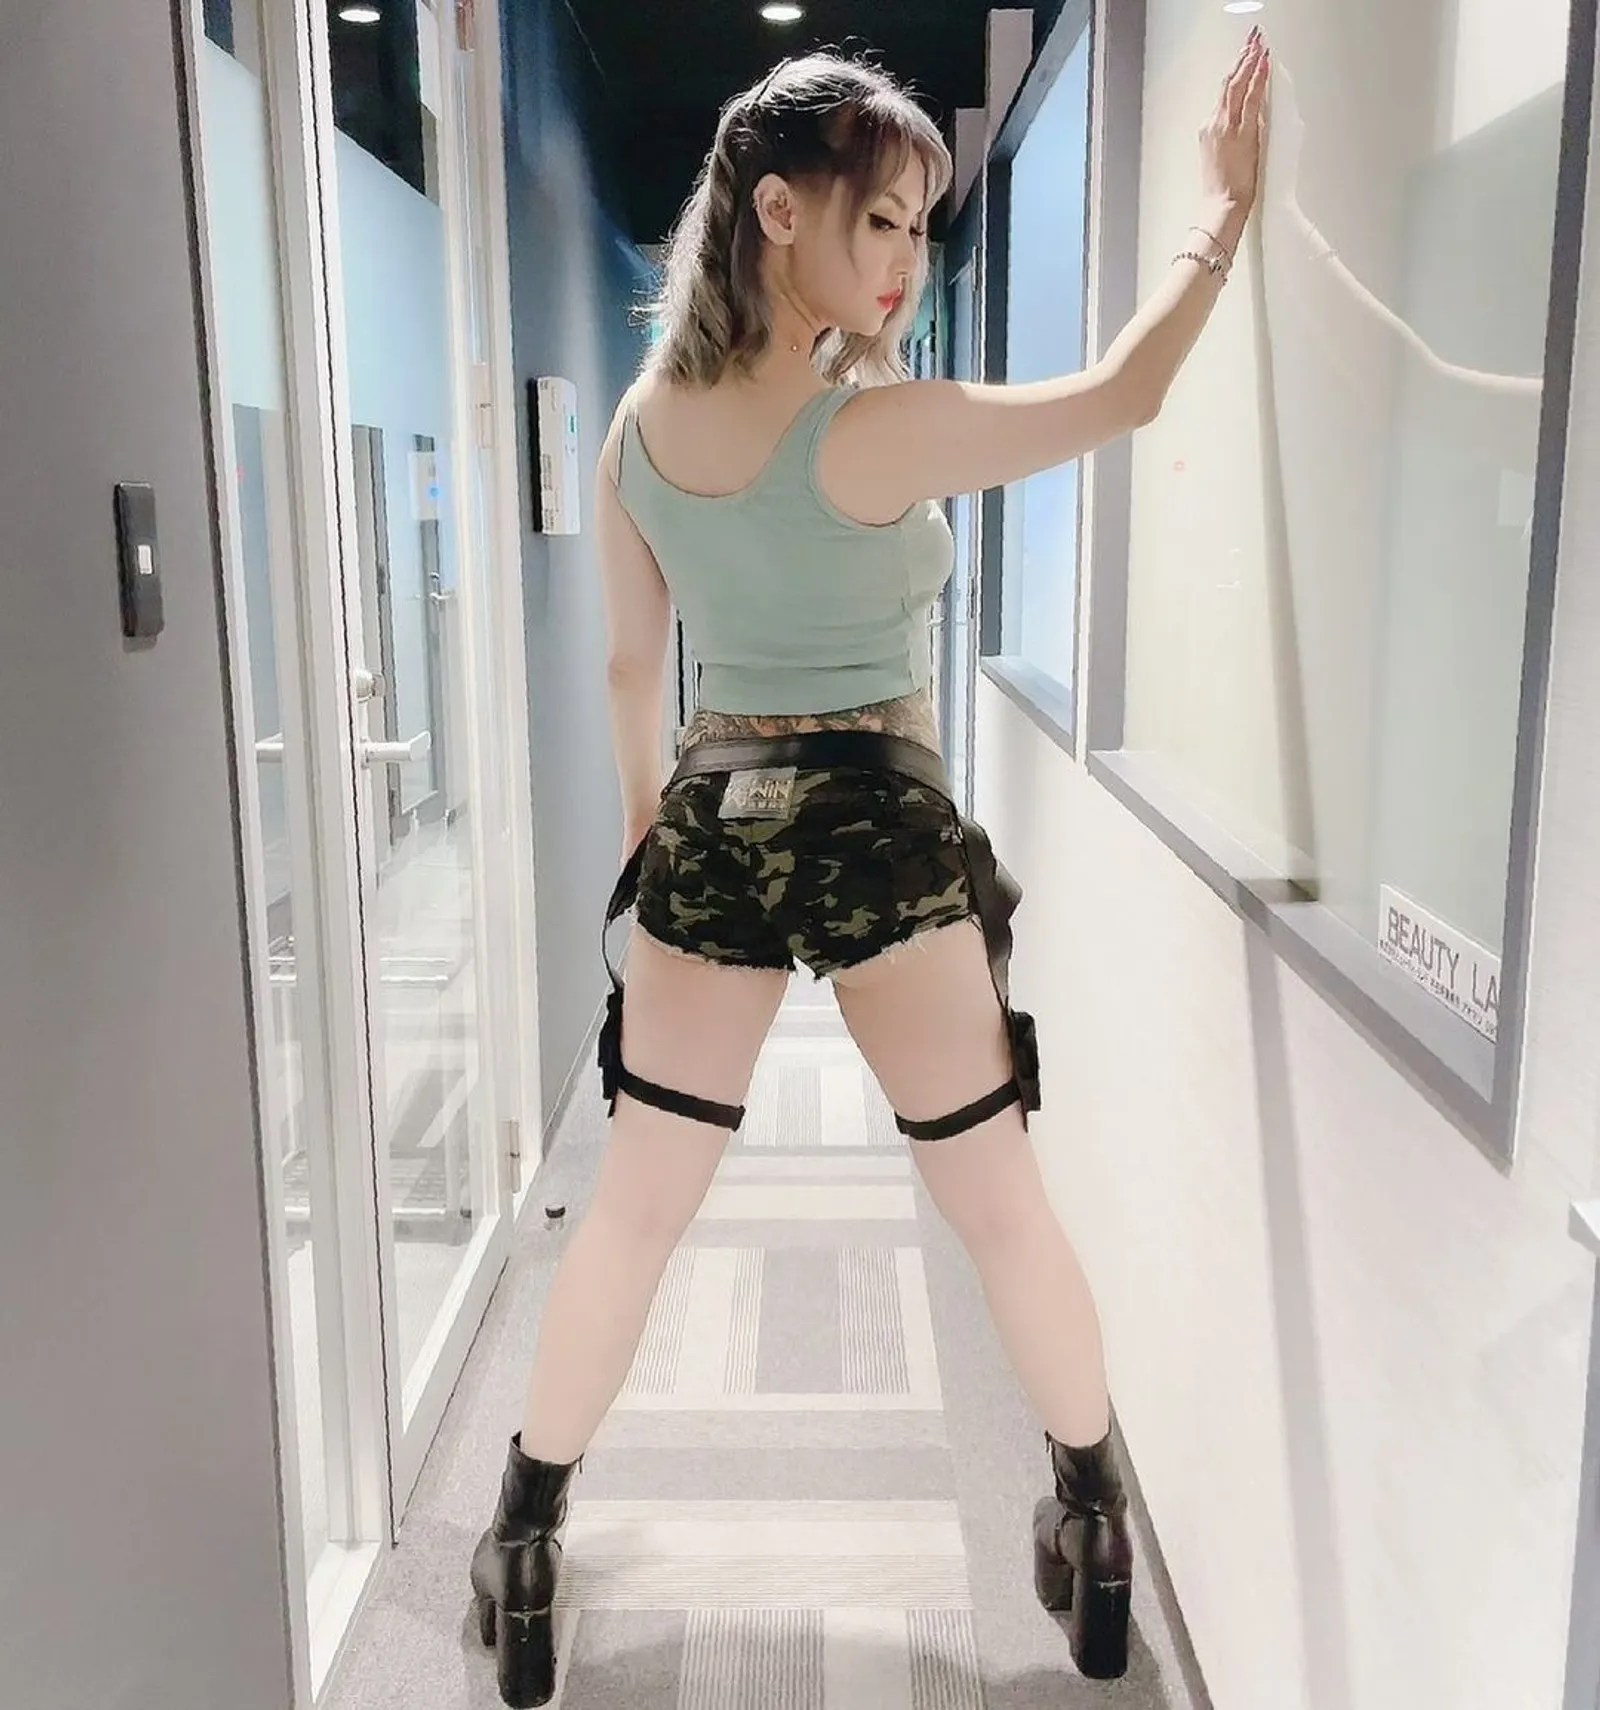 Dulu Buka-bukaan, Begini Potret Terbaru Maria Ozawa Si Bintang Porno